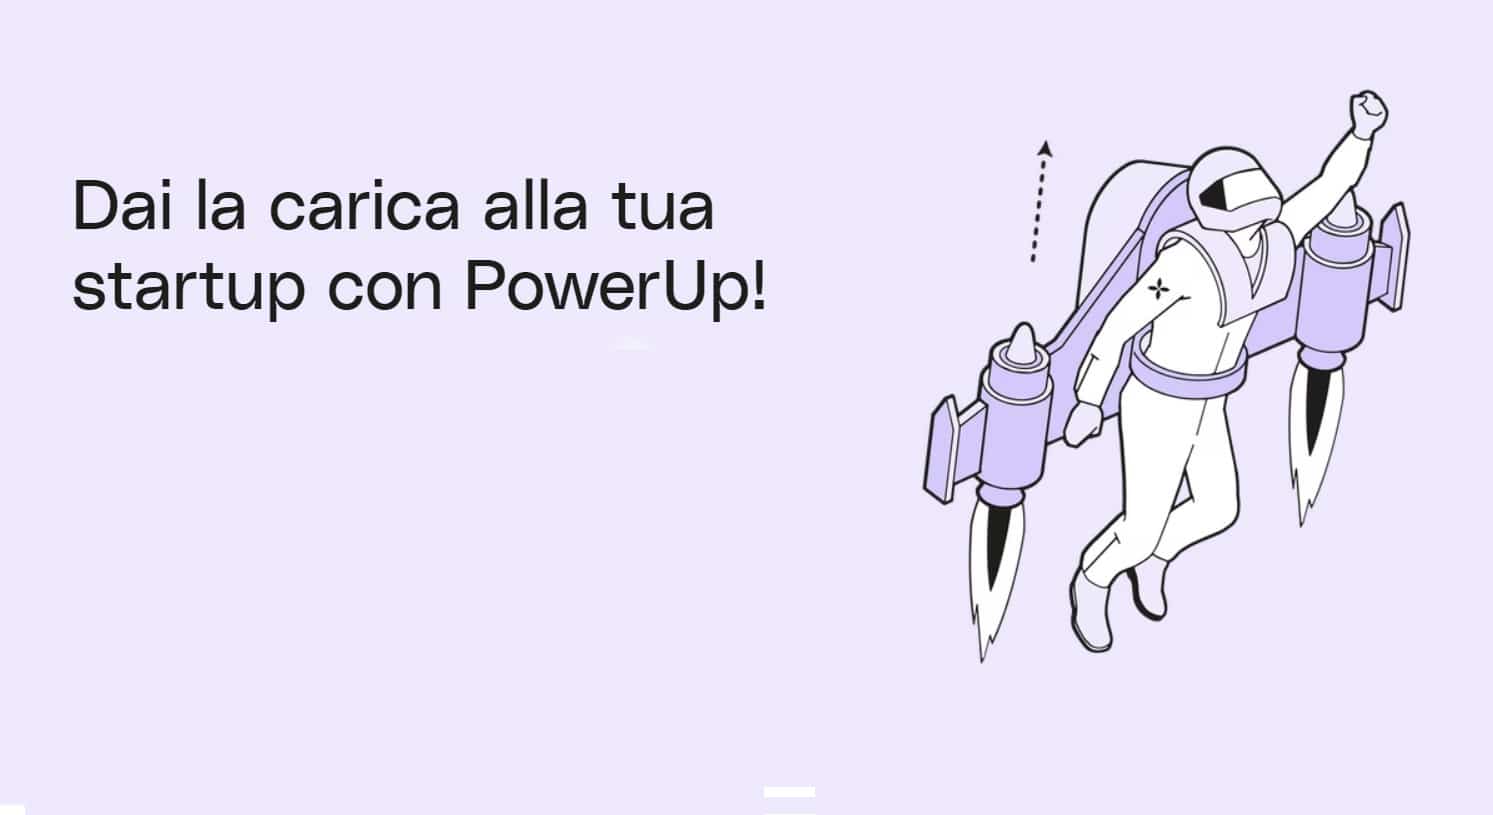 Qonto call for startup PowerUp!